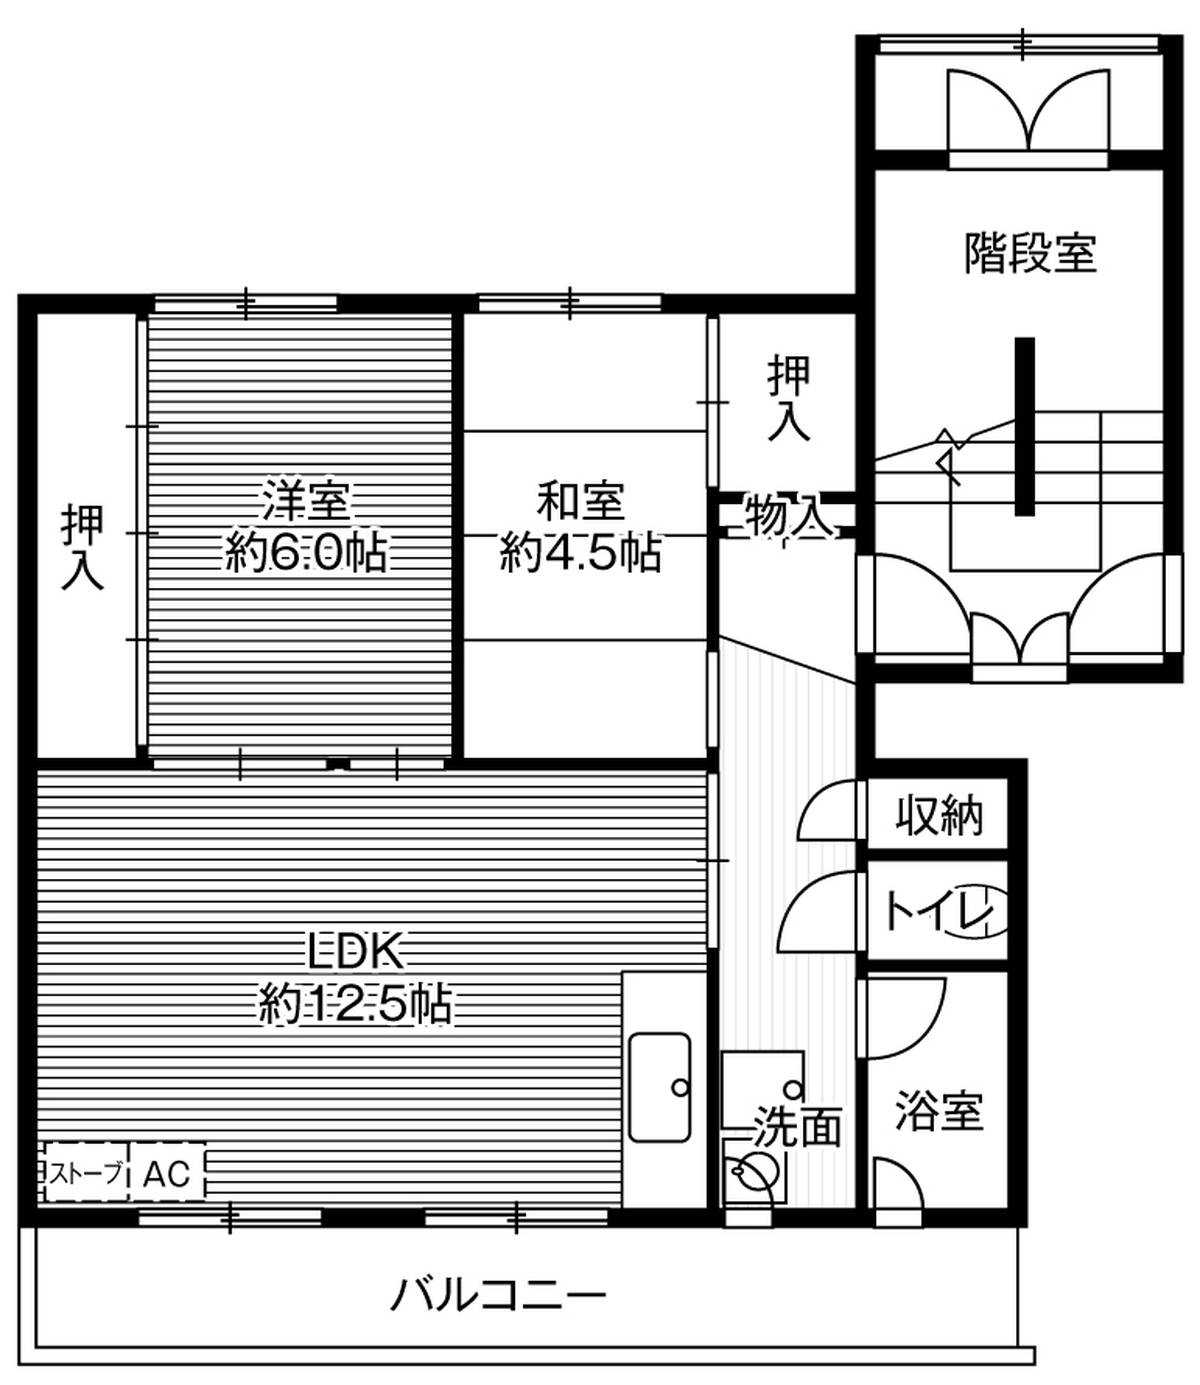 3DK floorplan of Village House Higashi Tsukisamu in Toyohira-ku